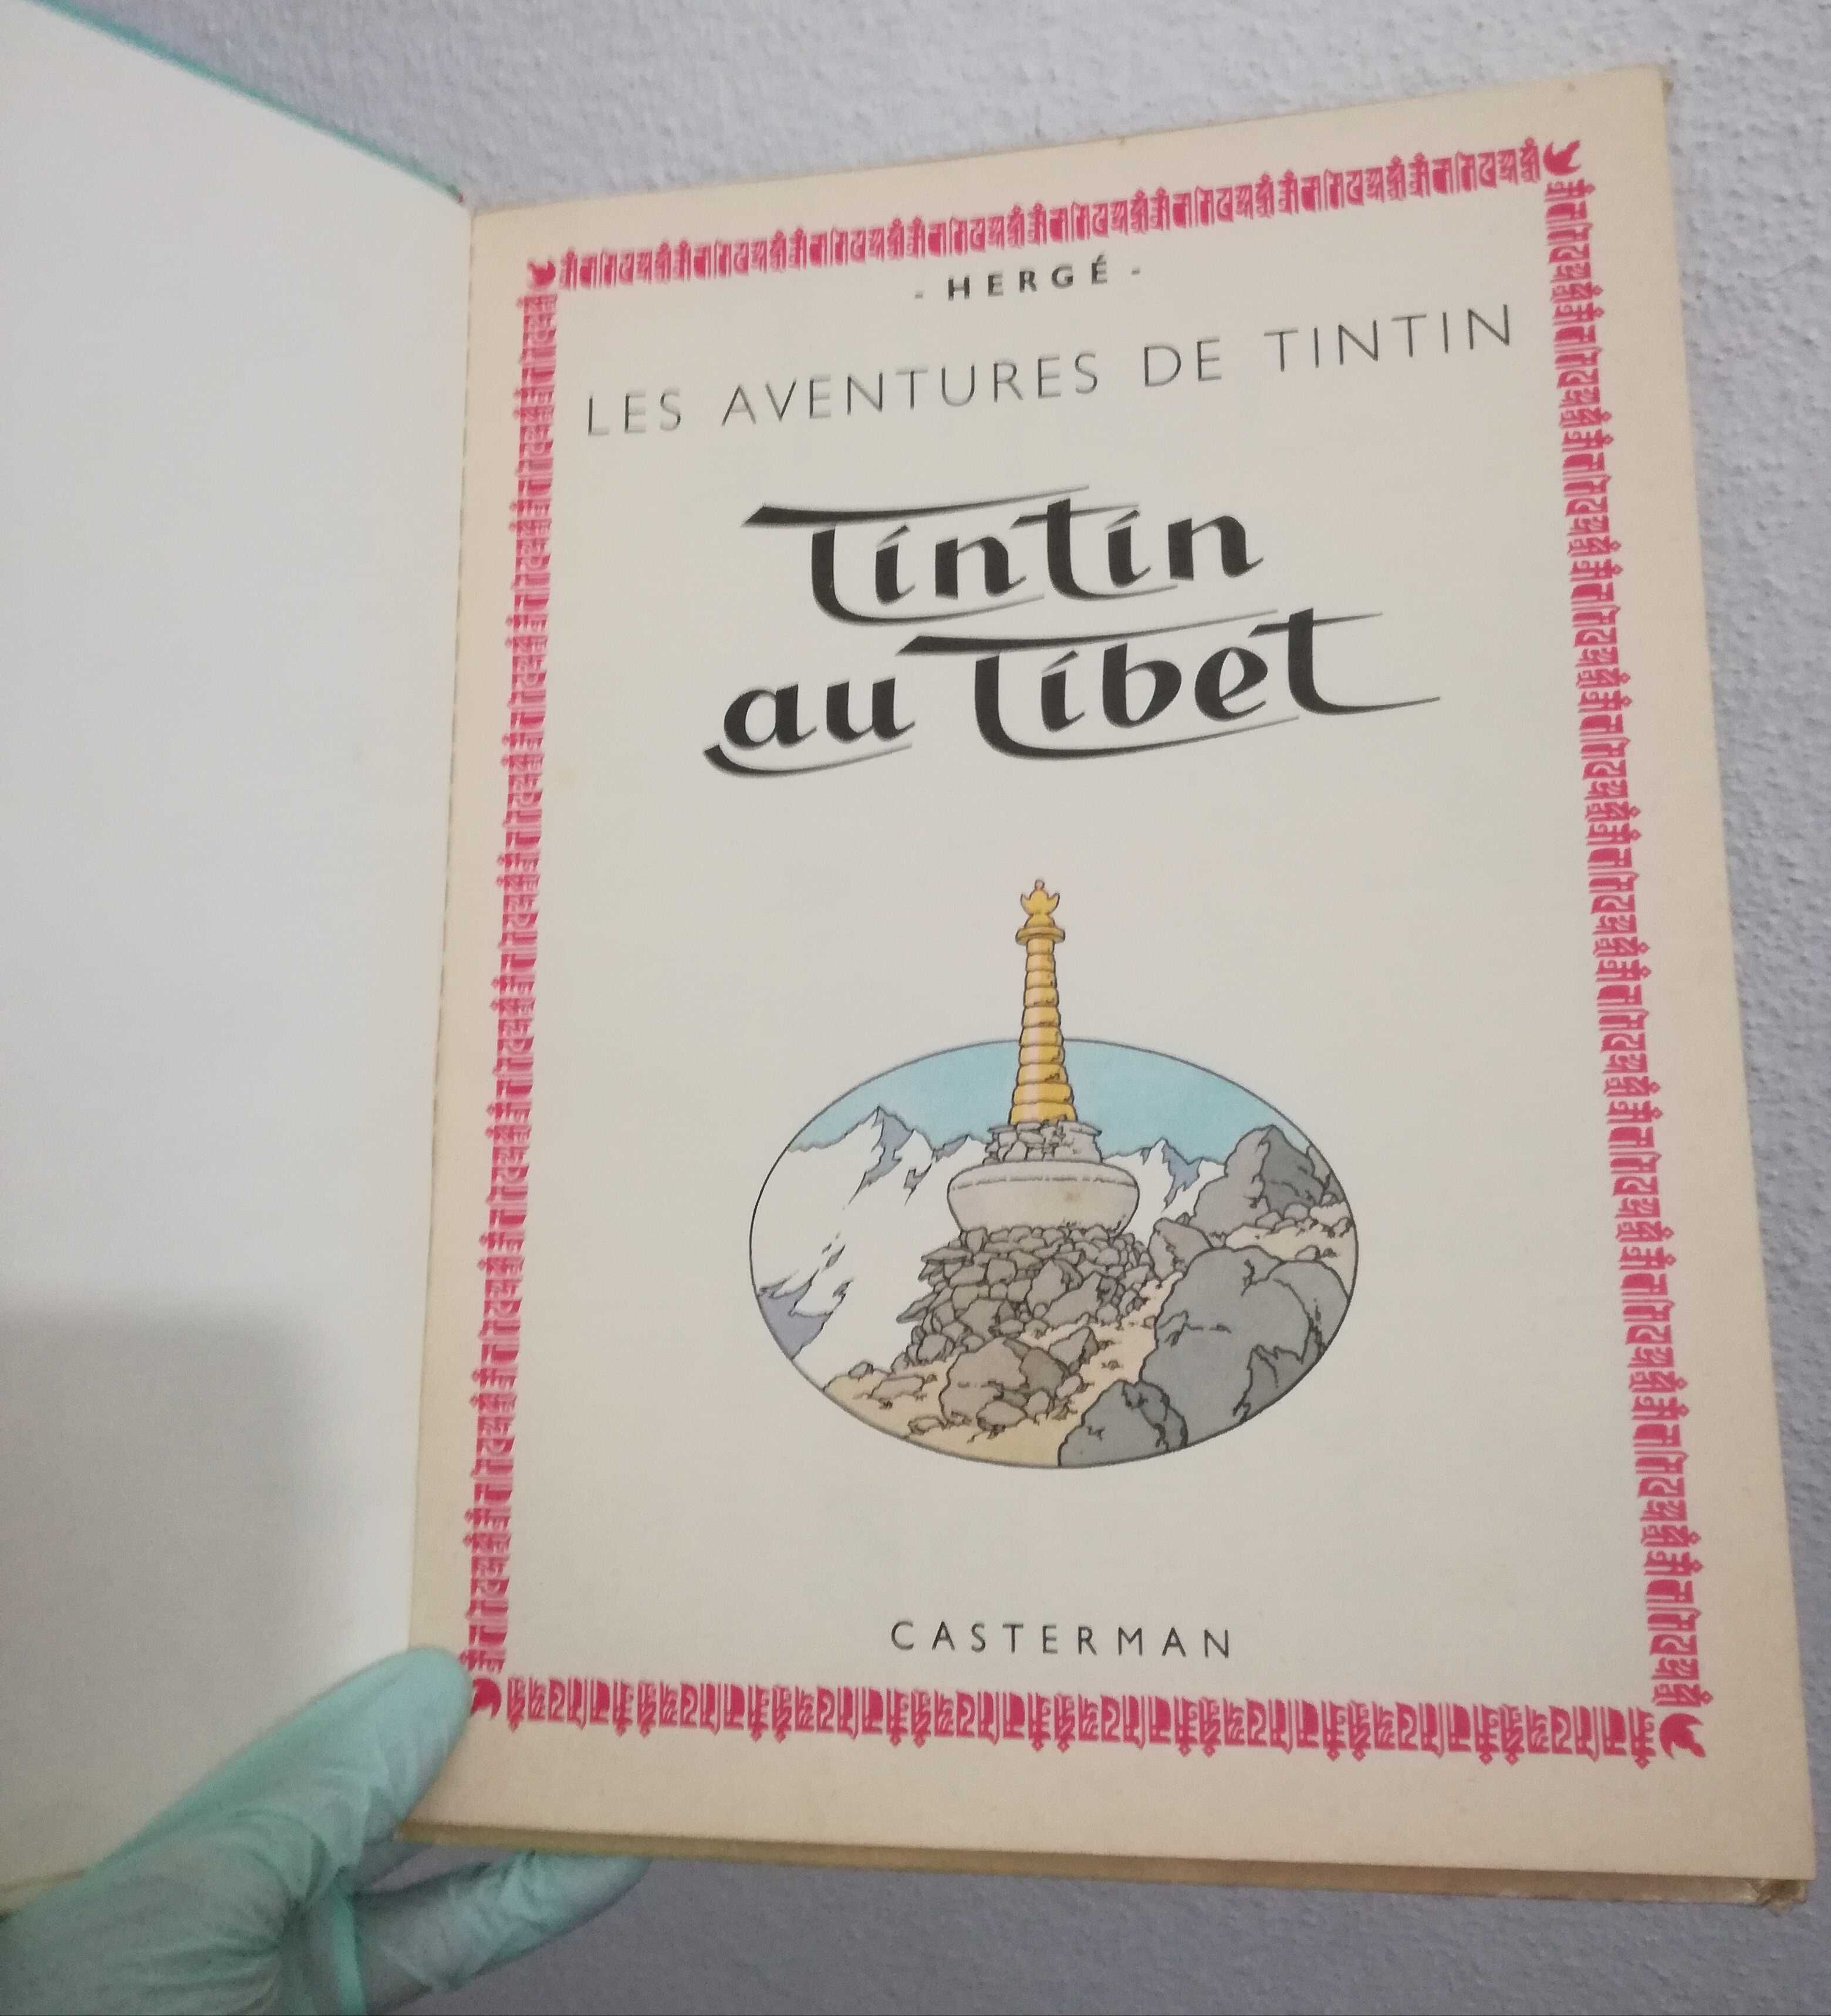 Tintin - 1° Edição Belga (1960) - Livro "Au Tibet".